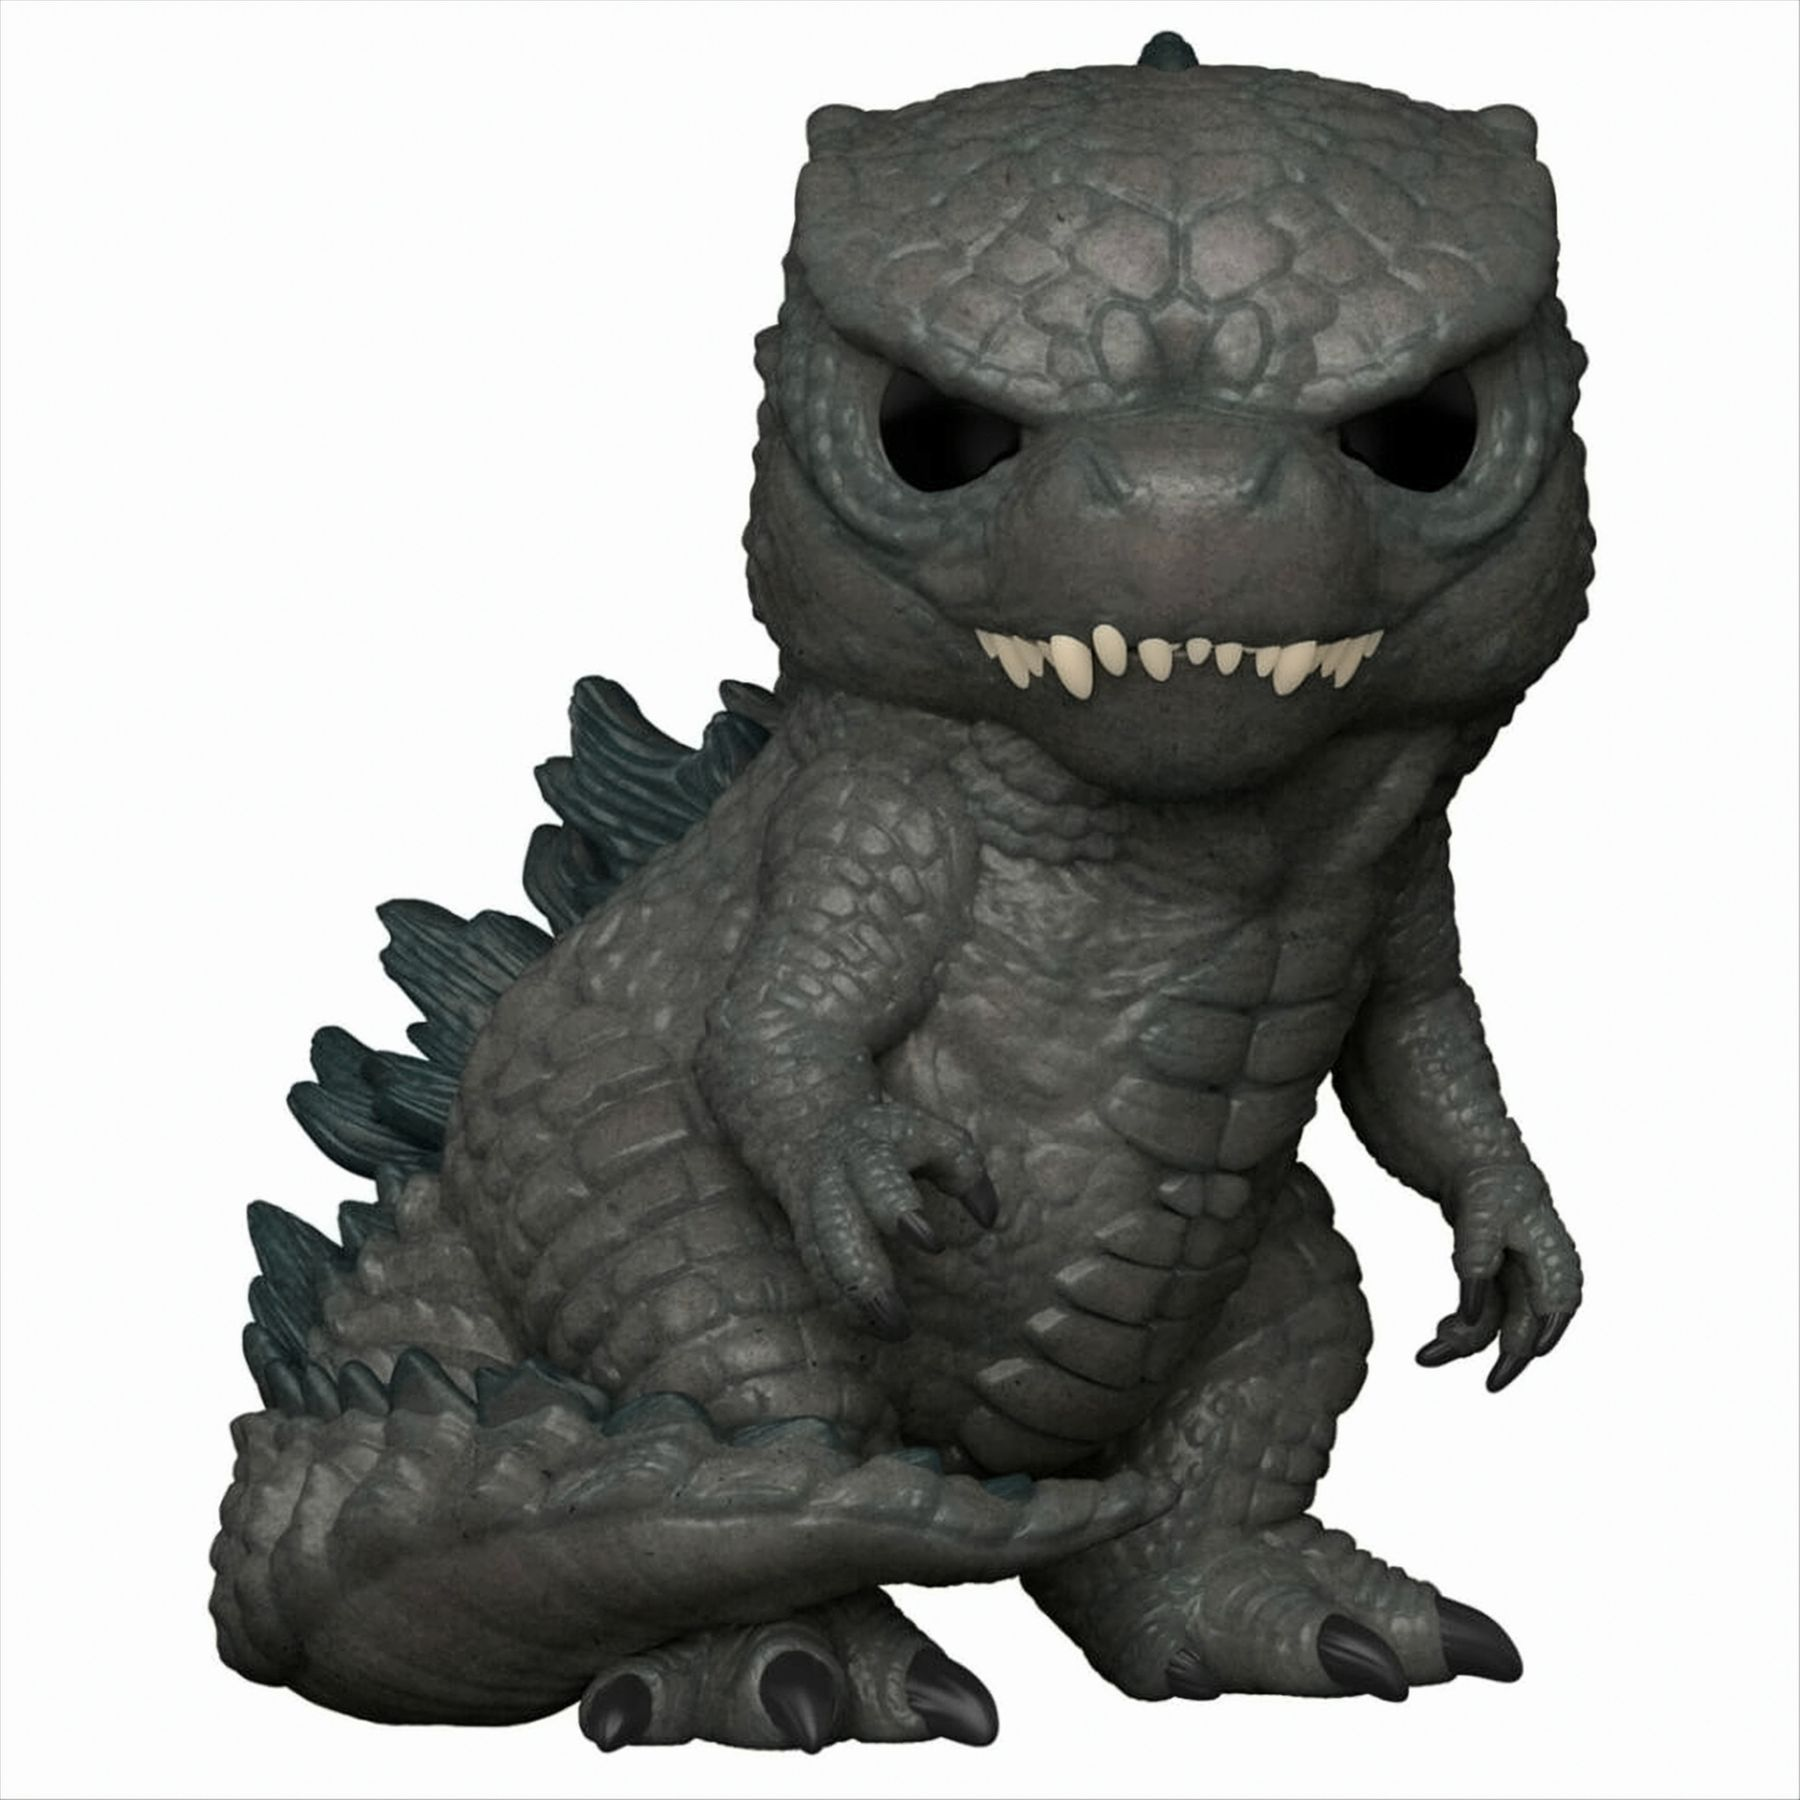 POP - - Kong vs. Godzilla Godzilla